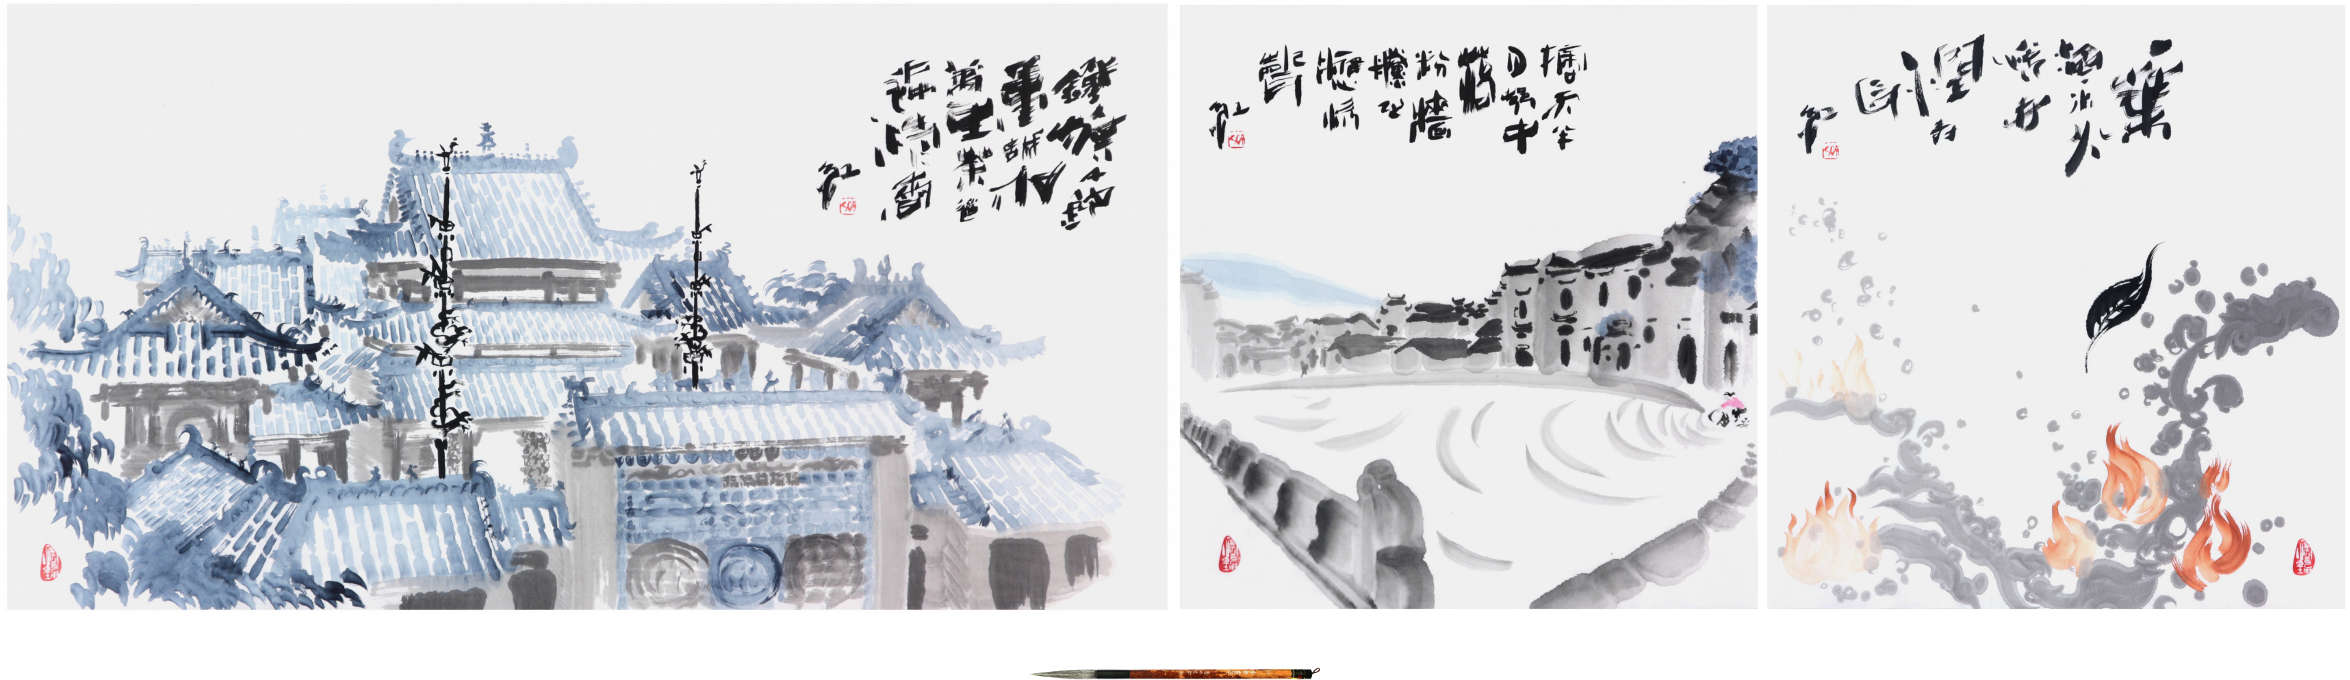 Sai Koh (Qi Hong)’s Freehand Brushwork Chinese Paintings: ruler painting, imaginary paintin, literati painting, ink wash painting